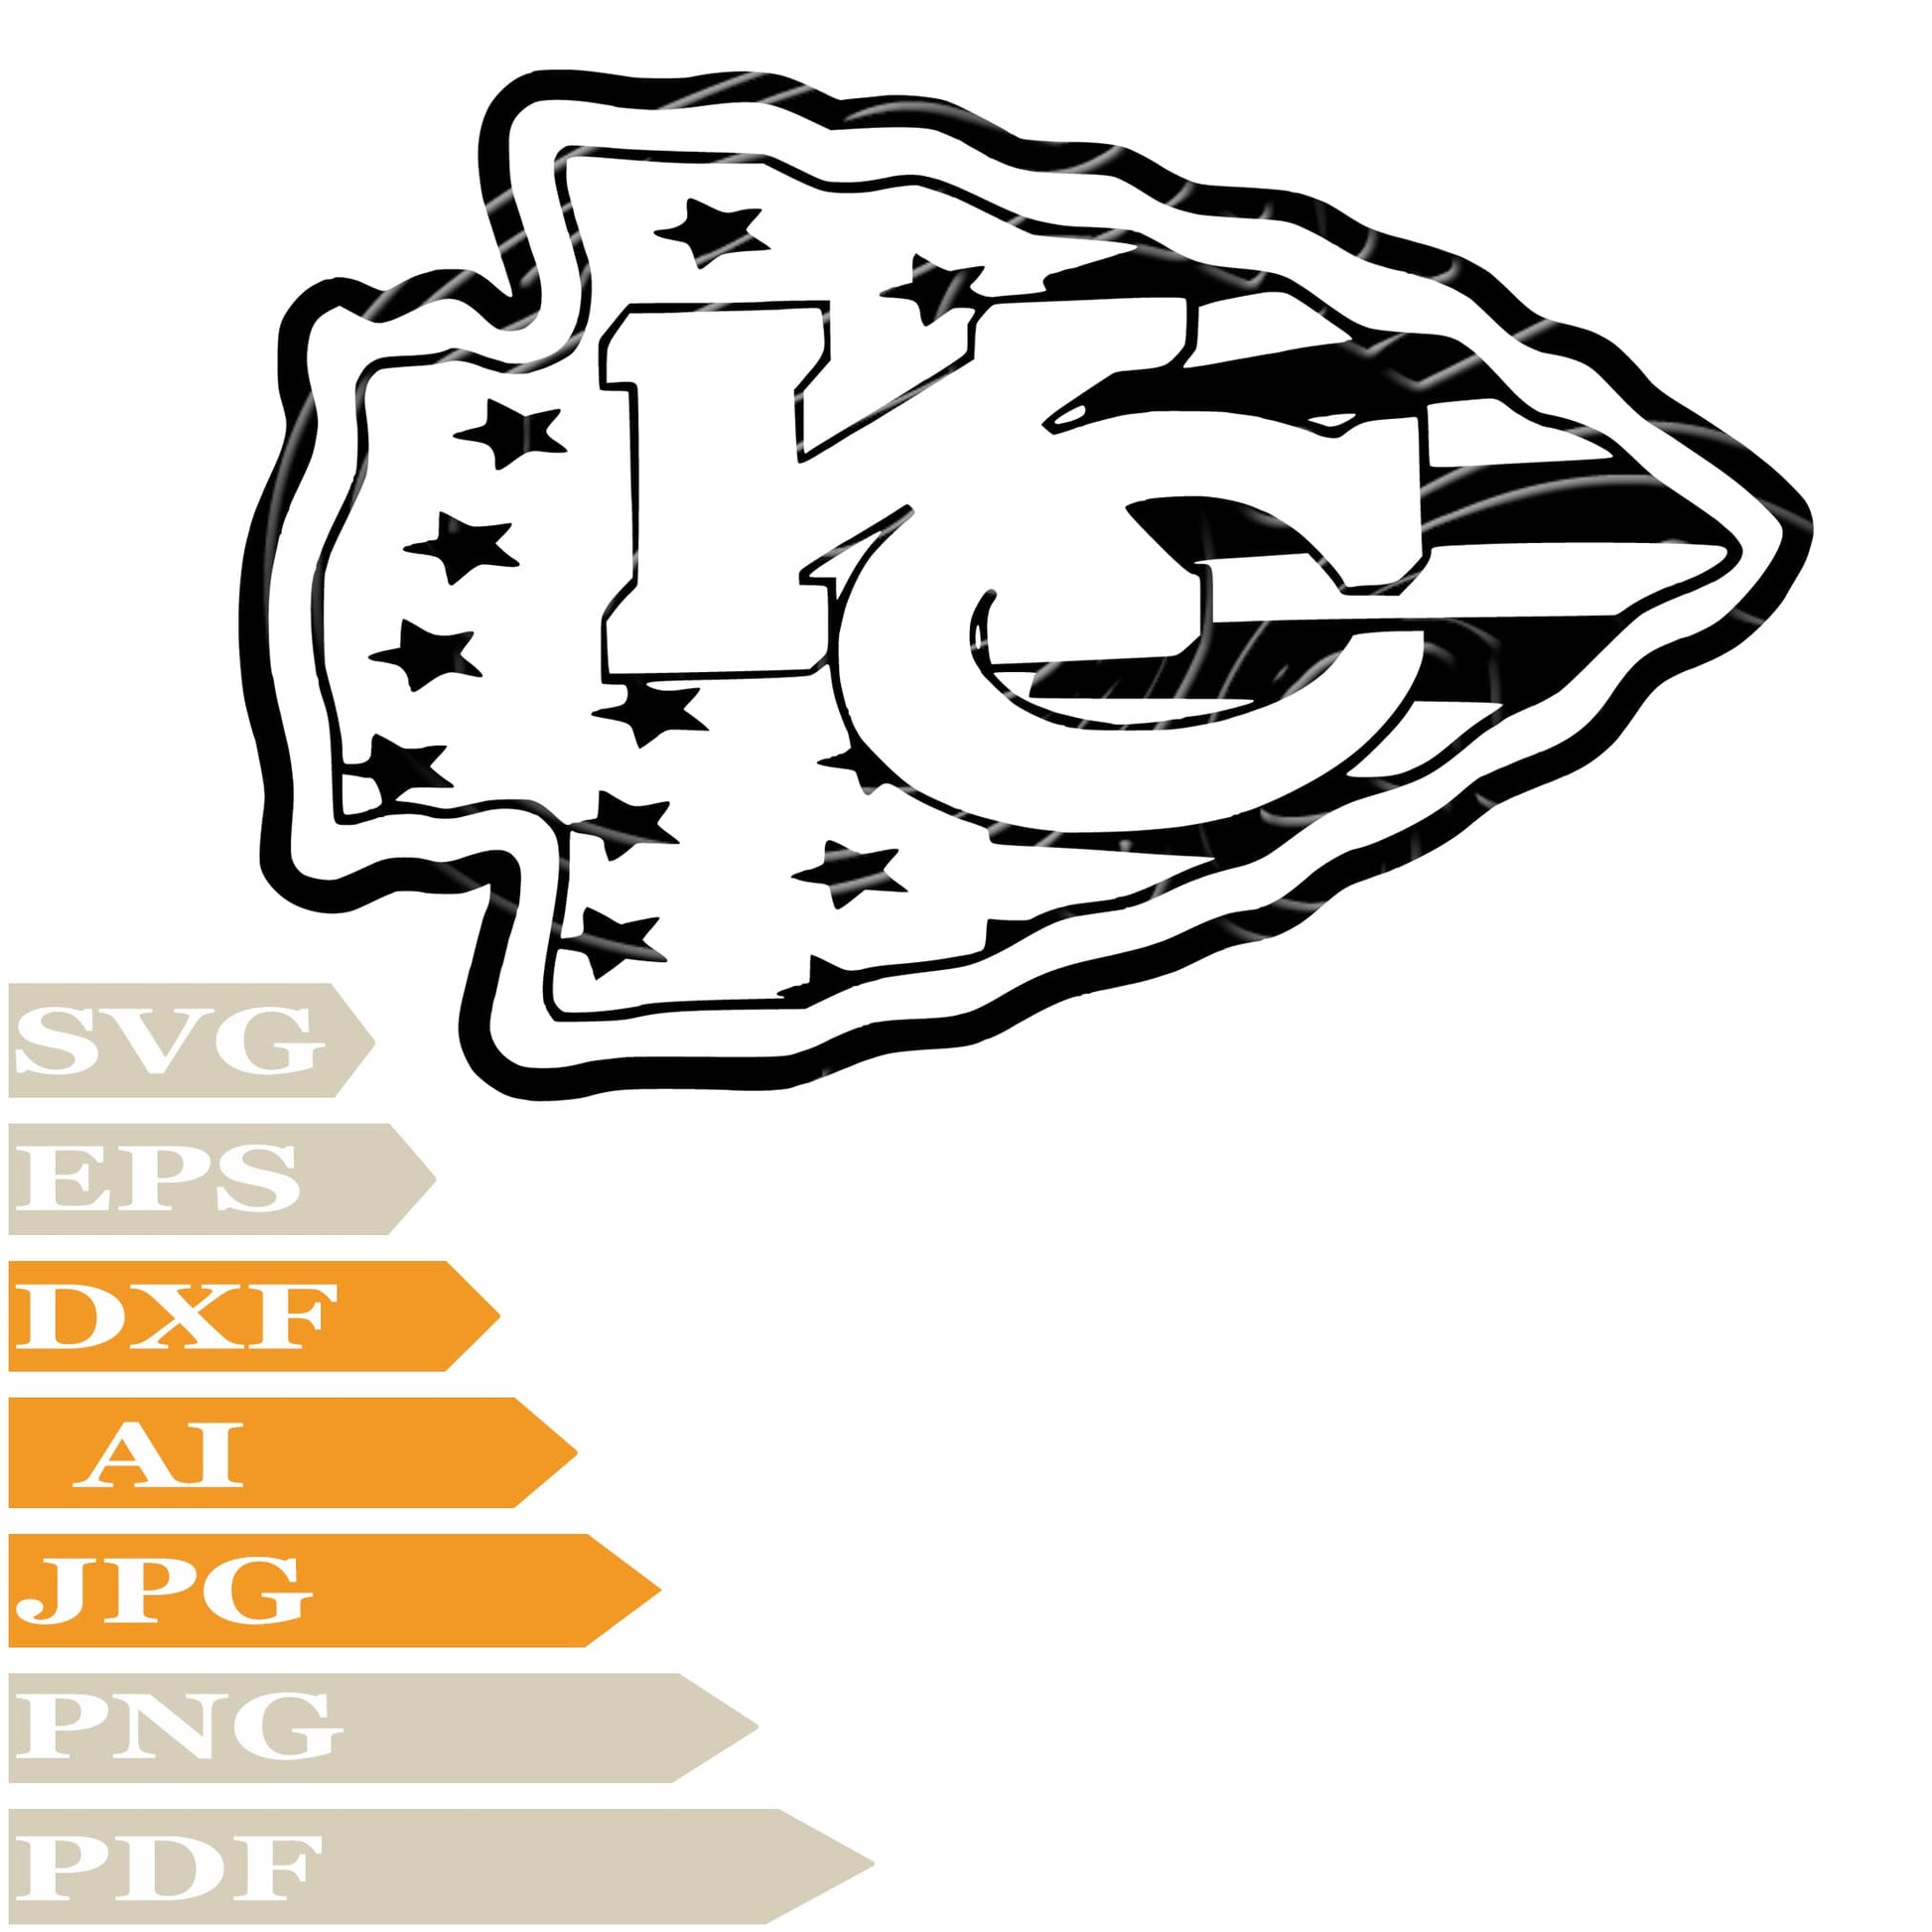 Kansas City Football, Kansas City Chiefs Logo Svg File, Image Cut, Png, For Tattoo, Silhouette, Digital Vector Download, Cut File, Clipart, For Cricut